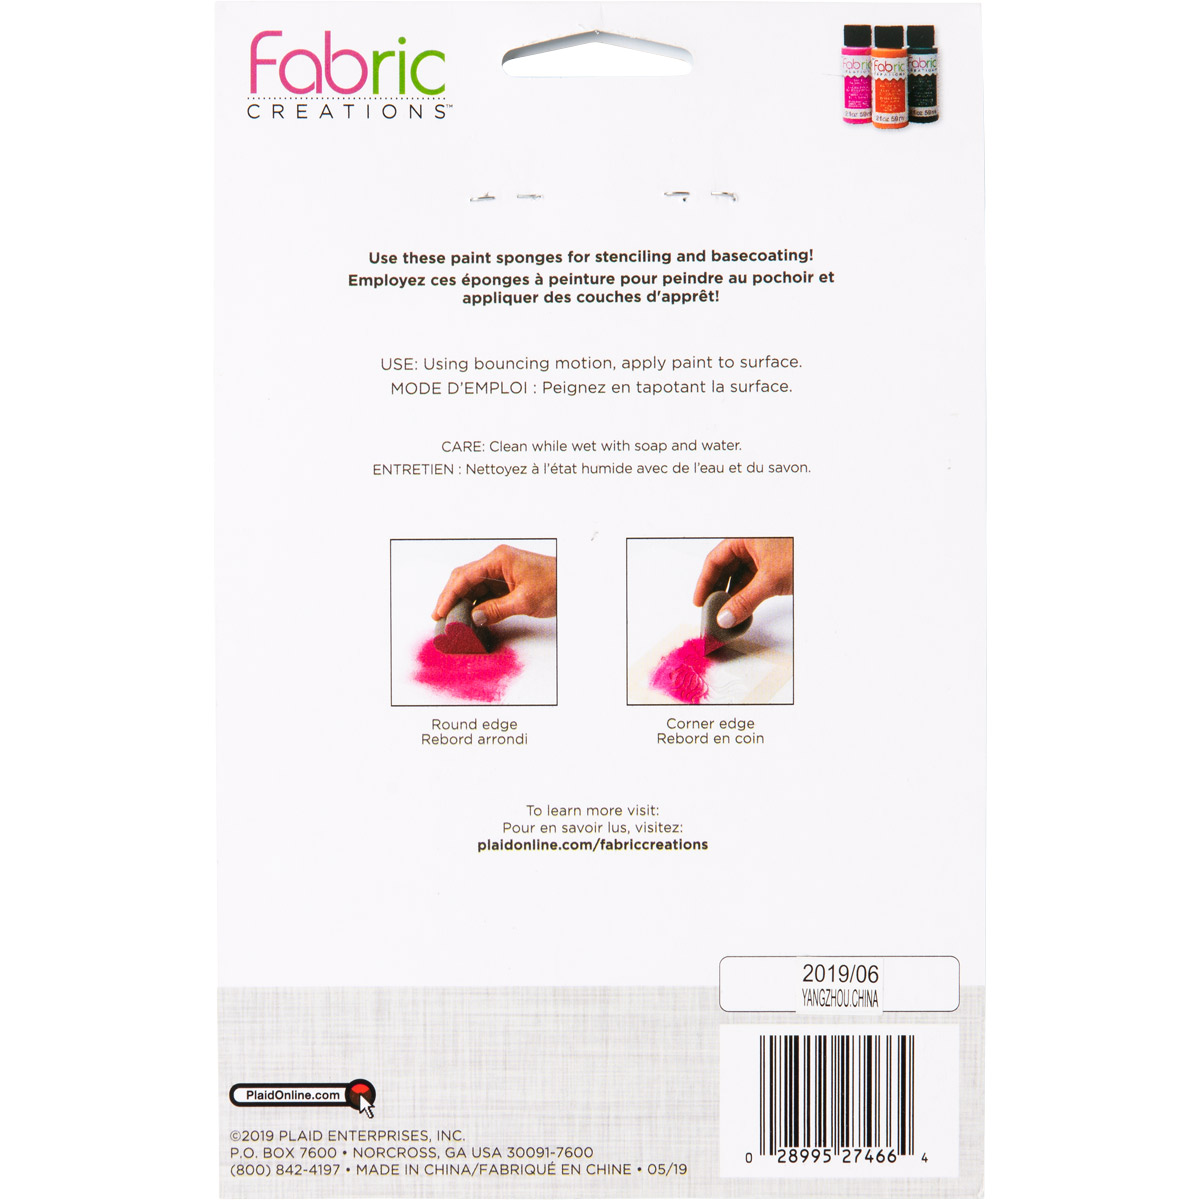 Fabric Creations™ Tools - Heart Shaped Sponge Applicators, 6 pc. - 27466